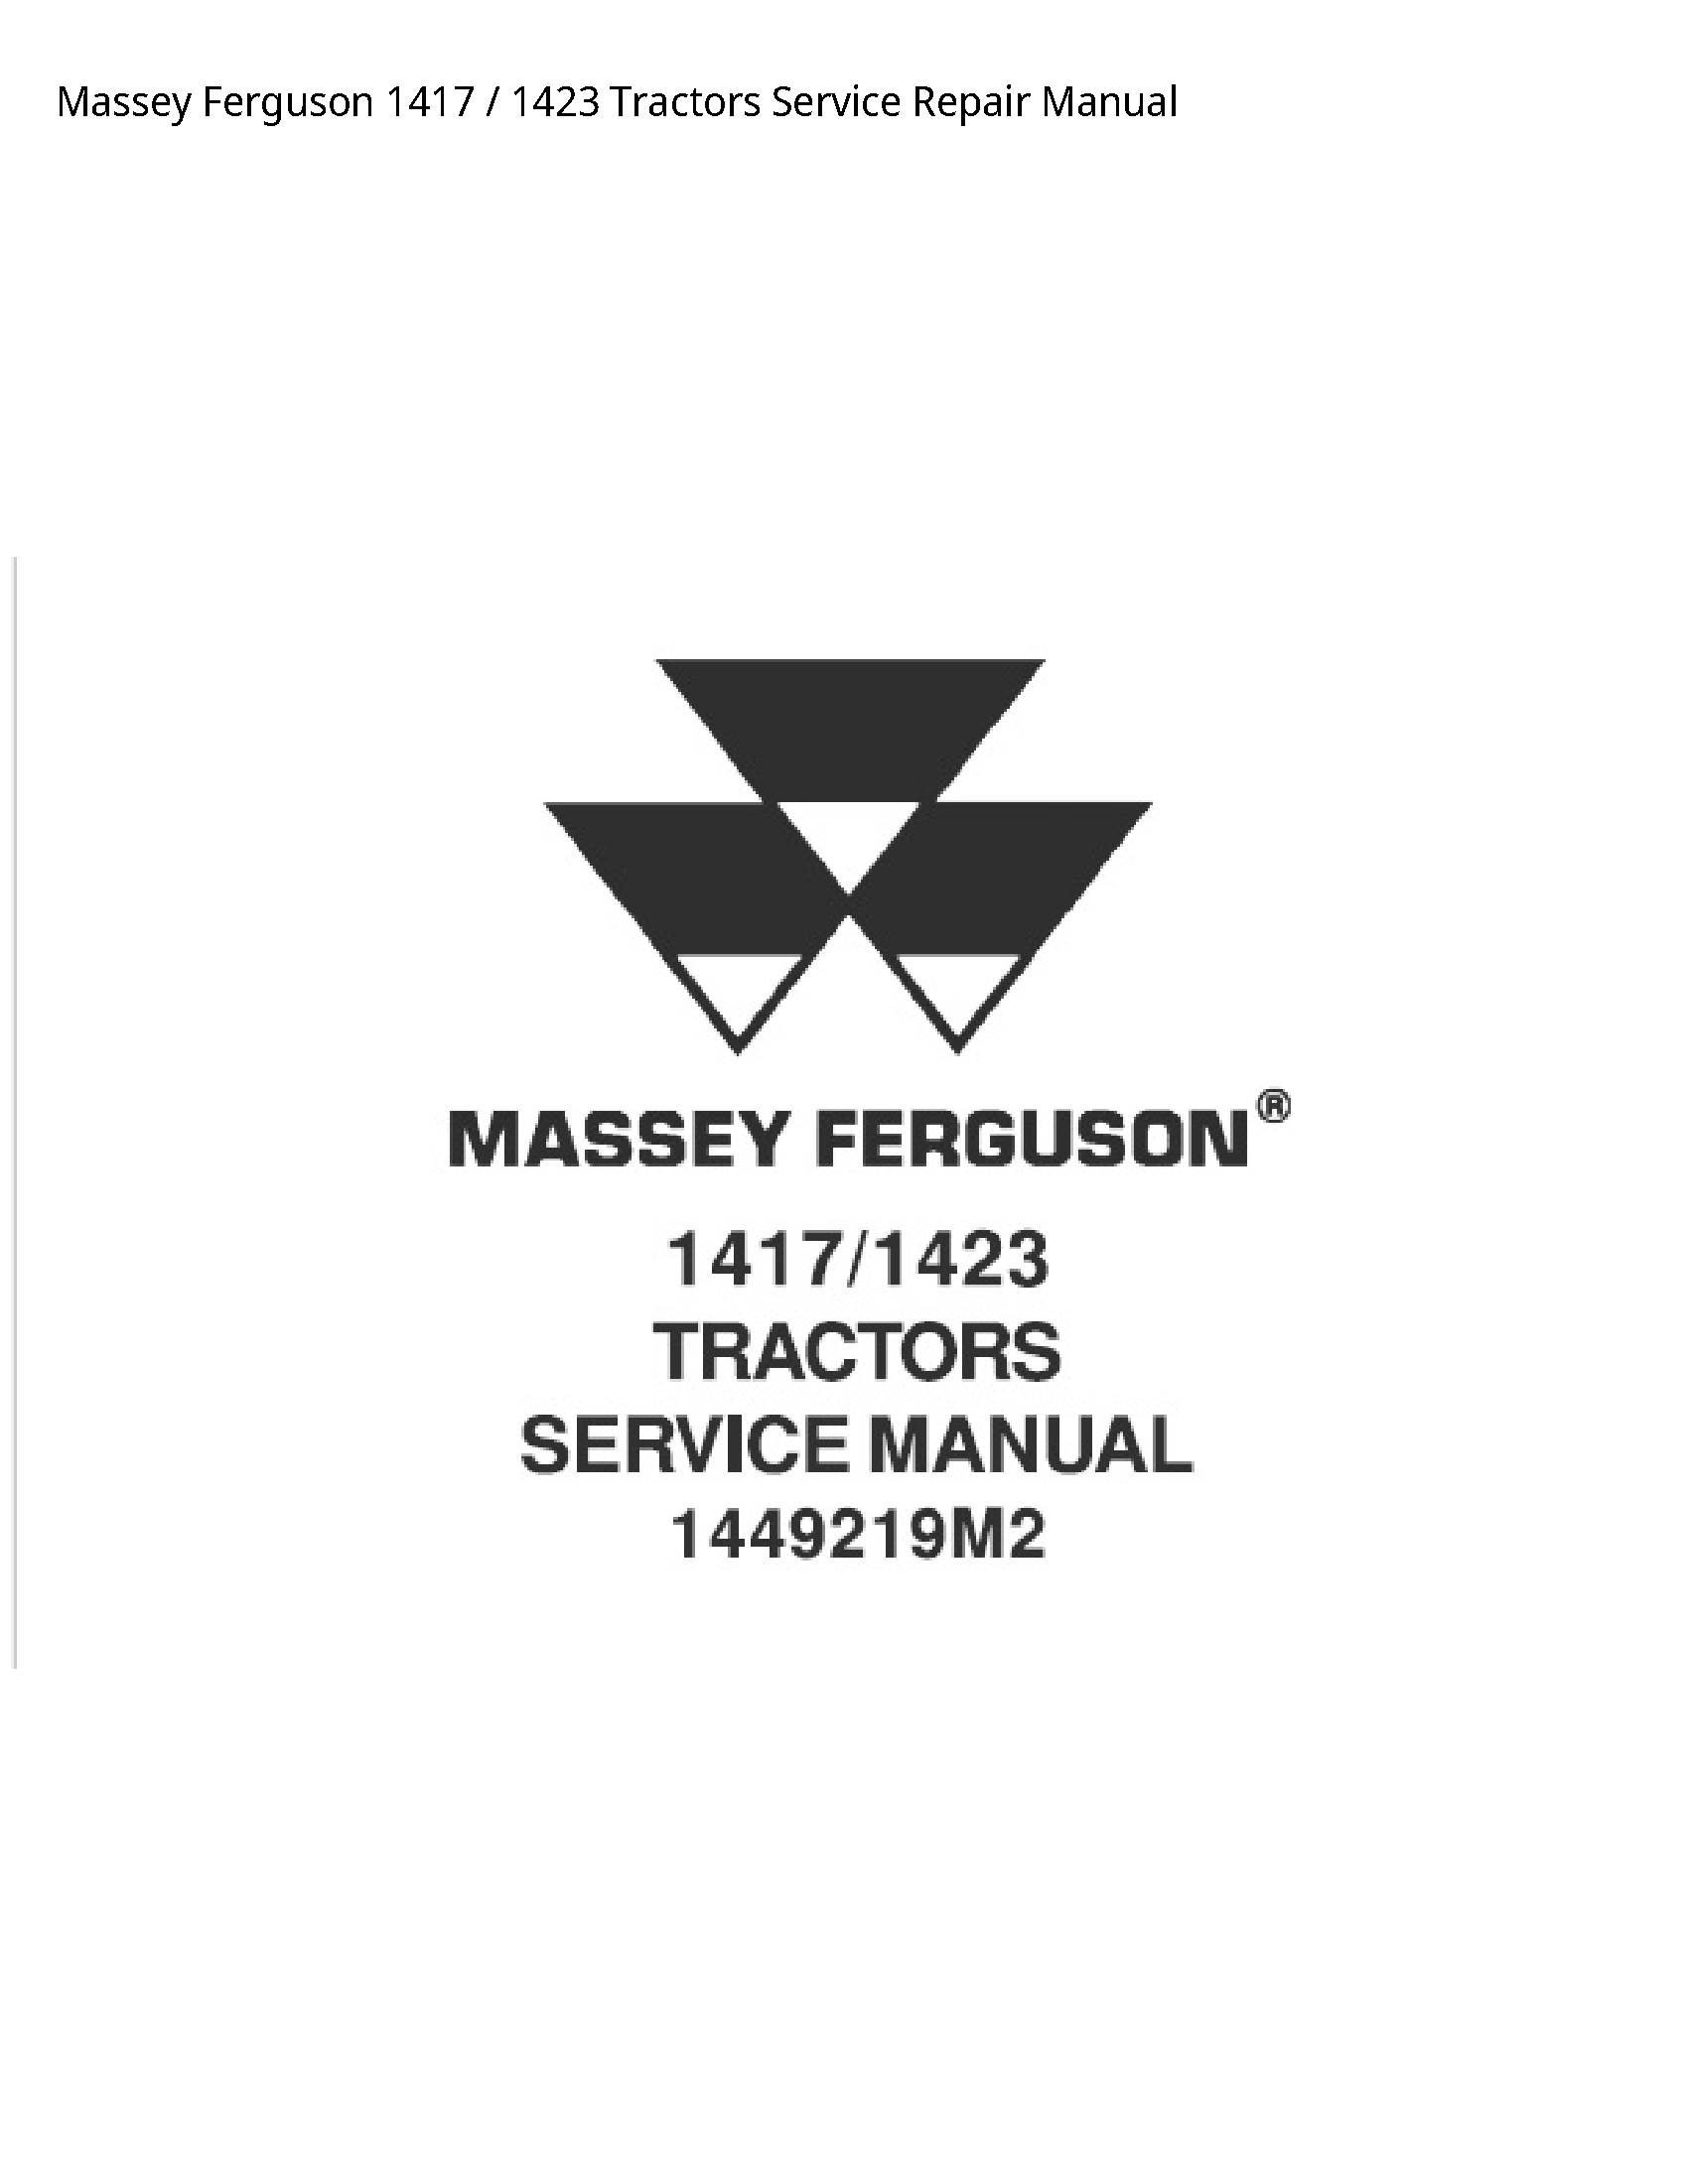 Massey Ferguson 1417 Tractors manual